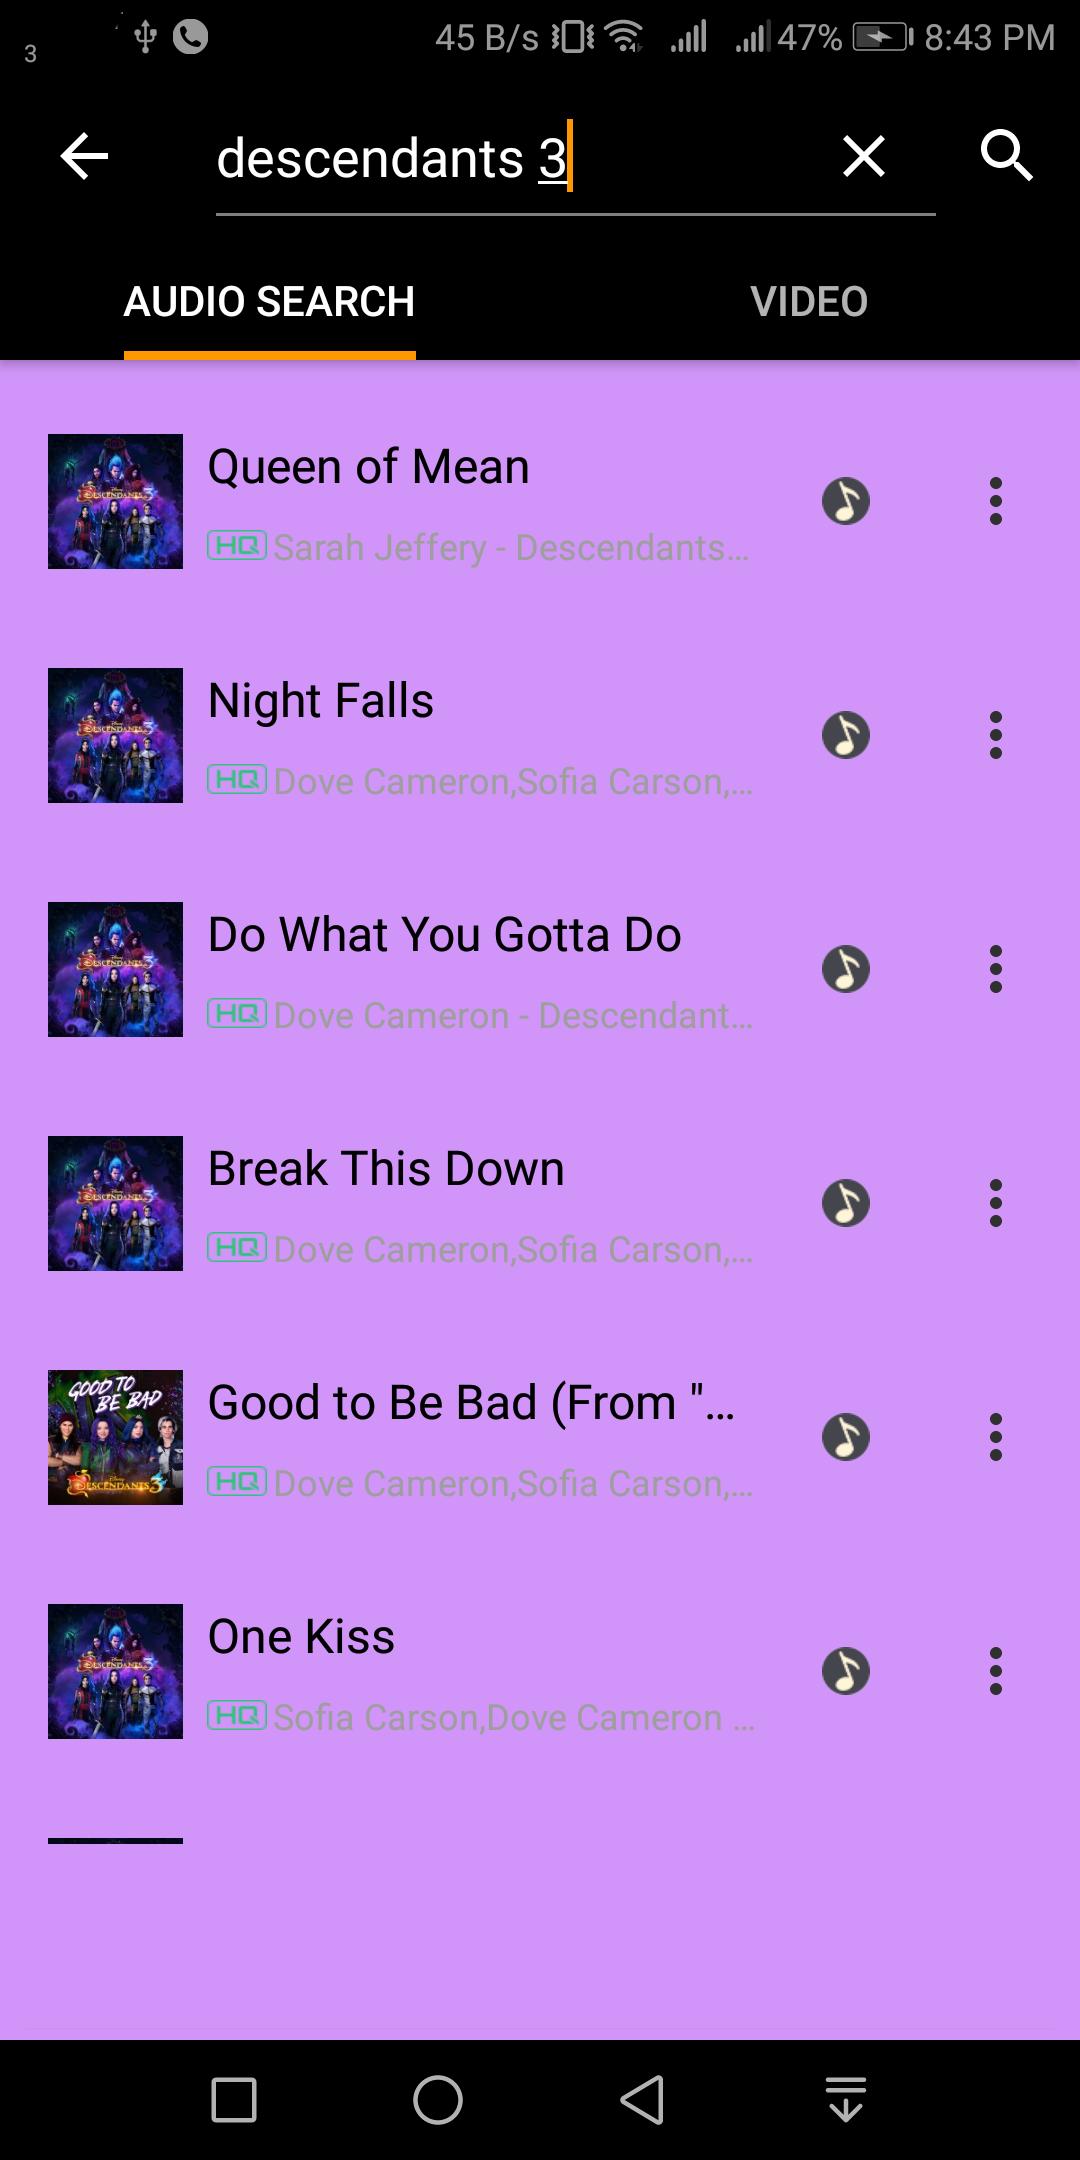 bunun gibi ufak çarpıtmak  Descendants 3 Songs Complete + Lyrics for Android - APK Download